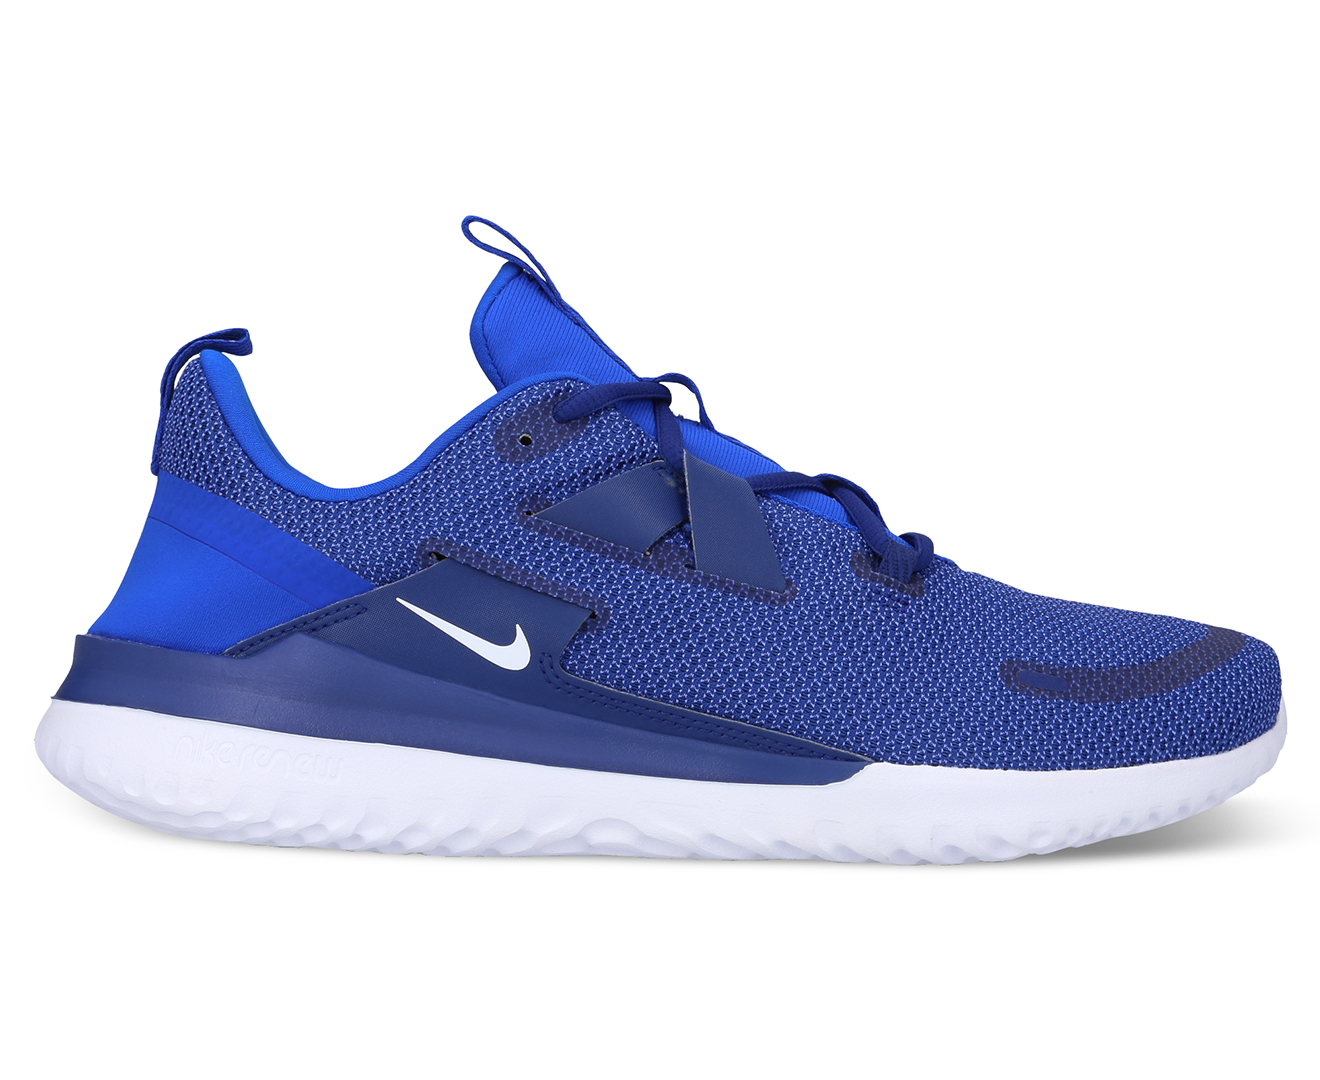 Nike Men's Renew Arena SPT Running Shoes - Racer Blue/White | Catch.com.au